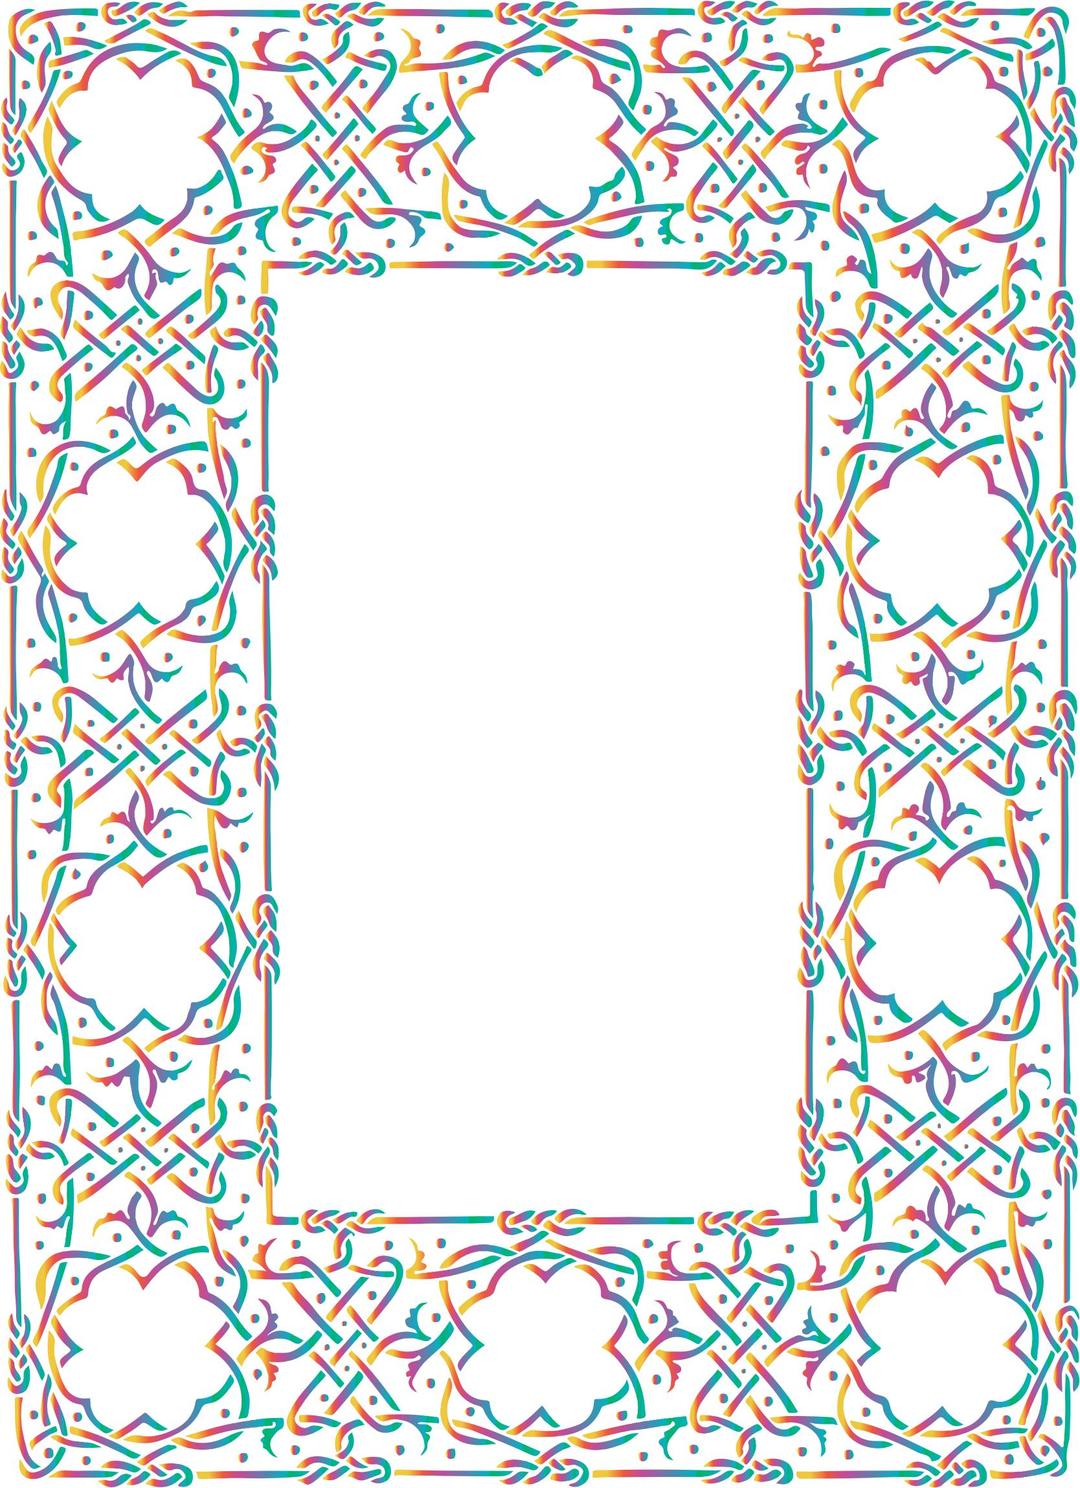 Prismatic Ornate Geometric Frame 2 No Background png transparent